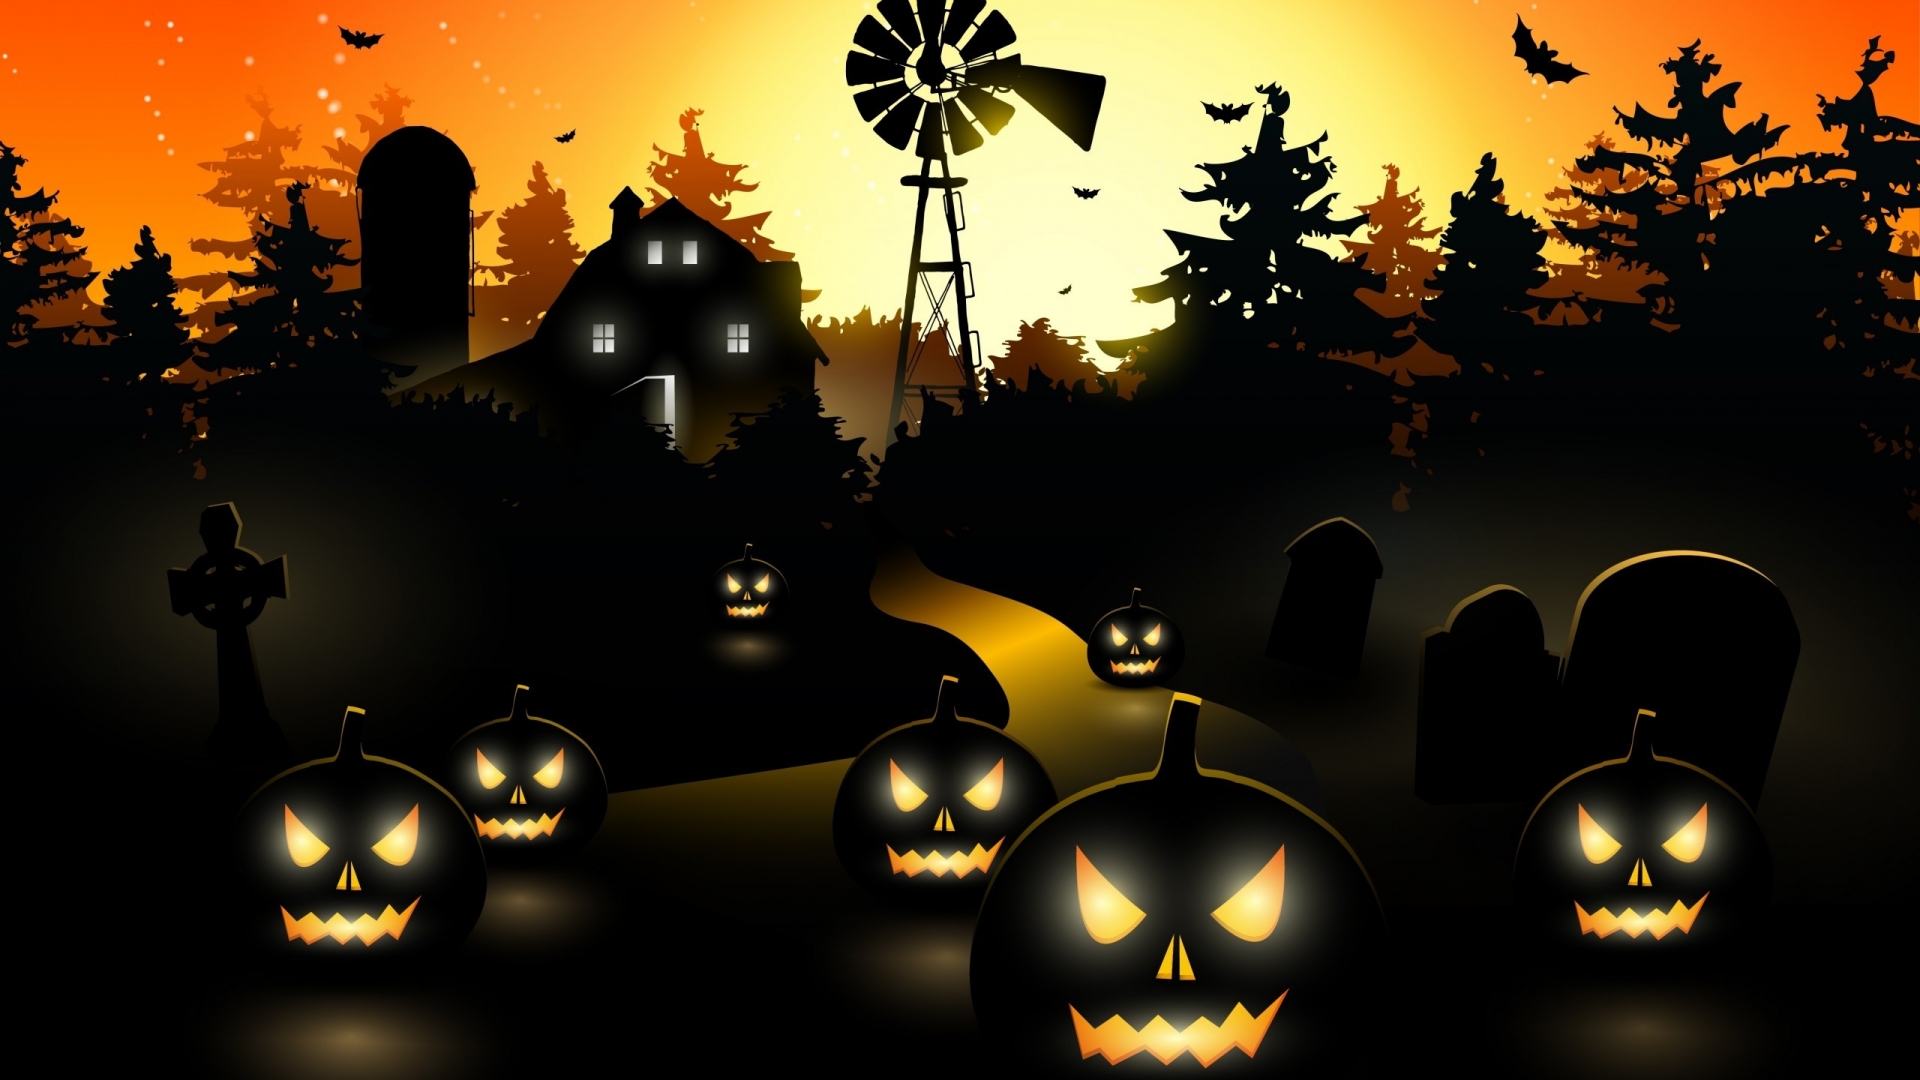 Halloween Black Pumpkins for 1920 x 1080 HDTV 1080p resolution